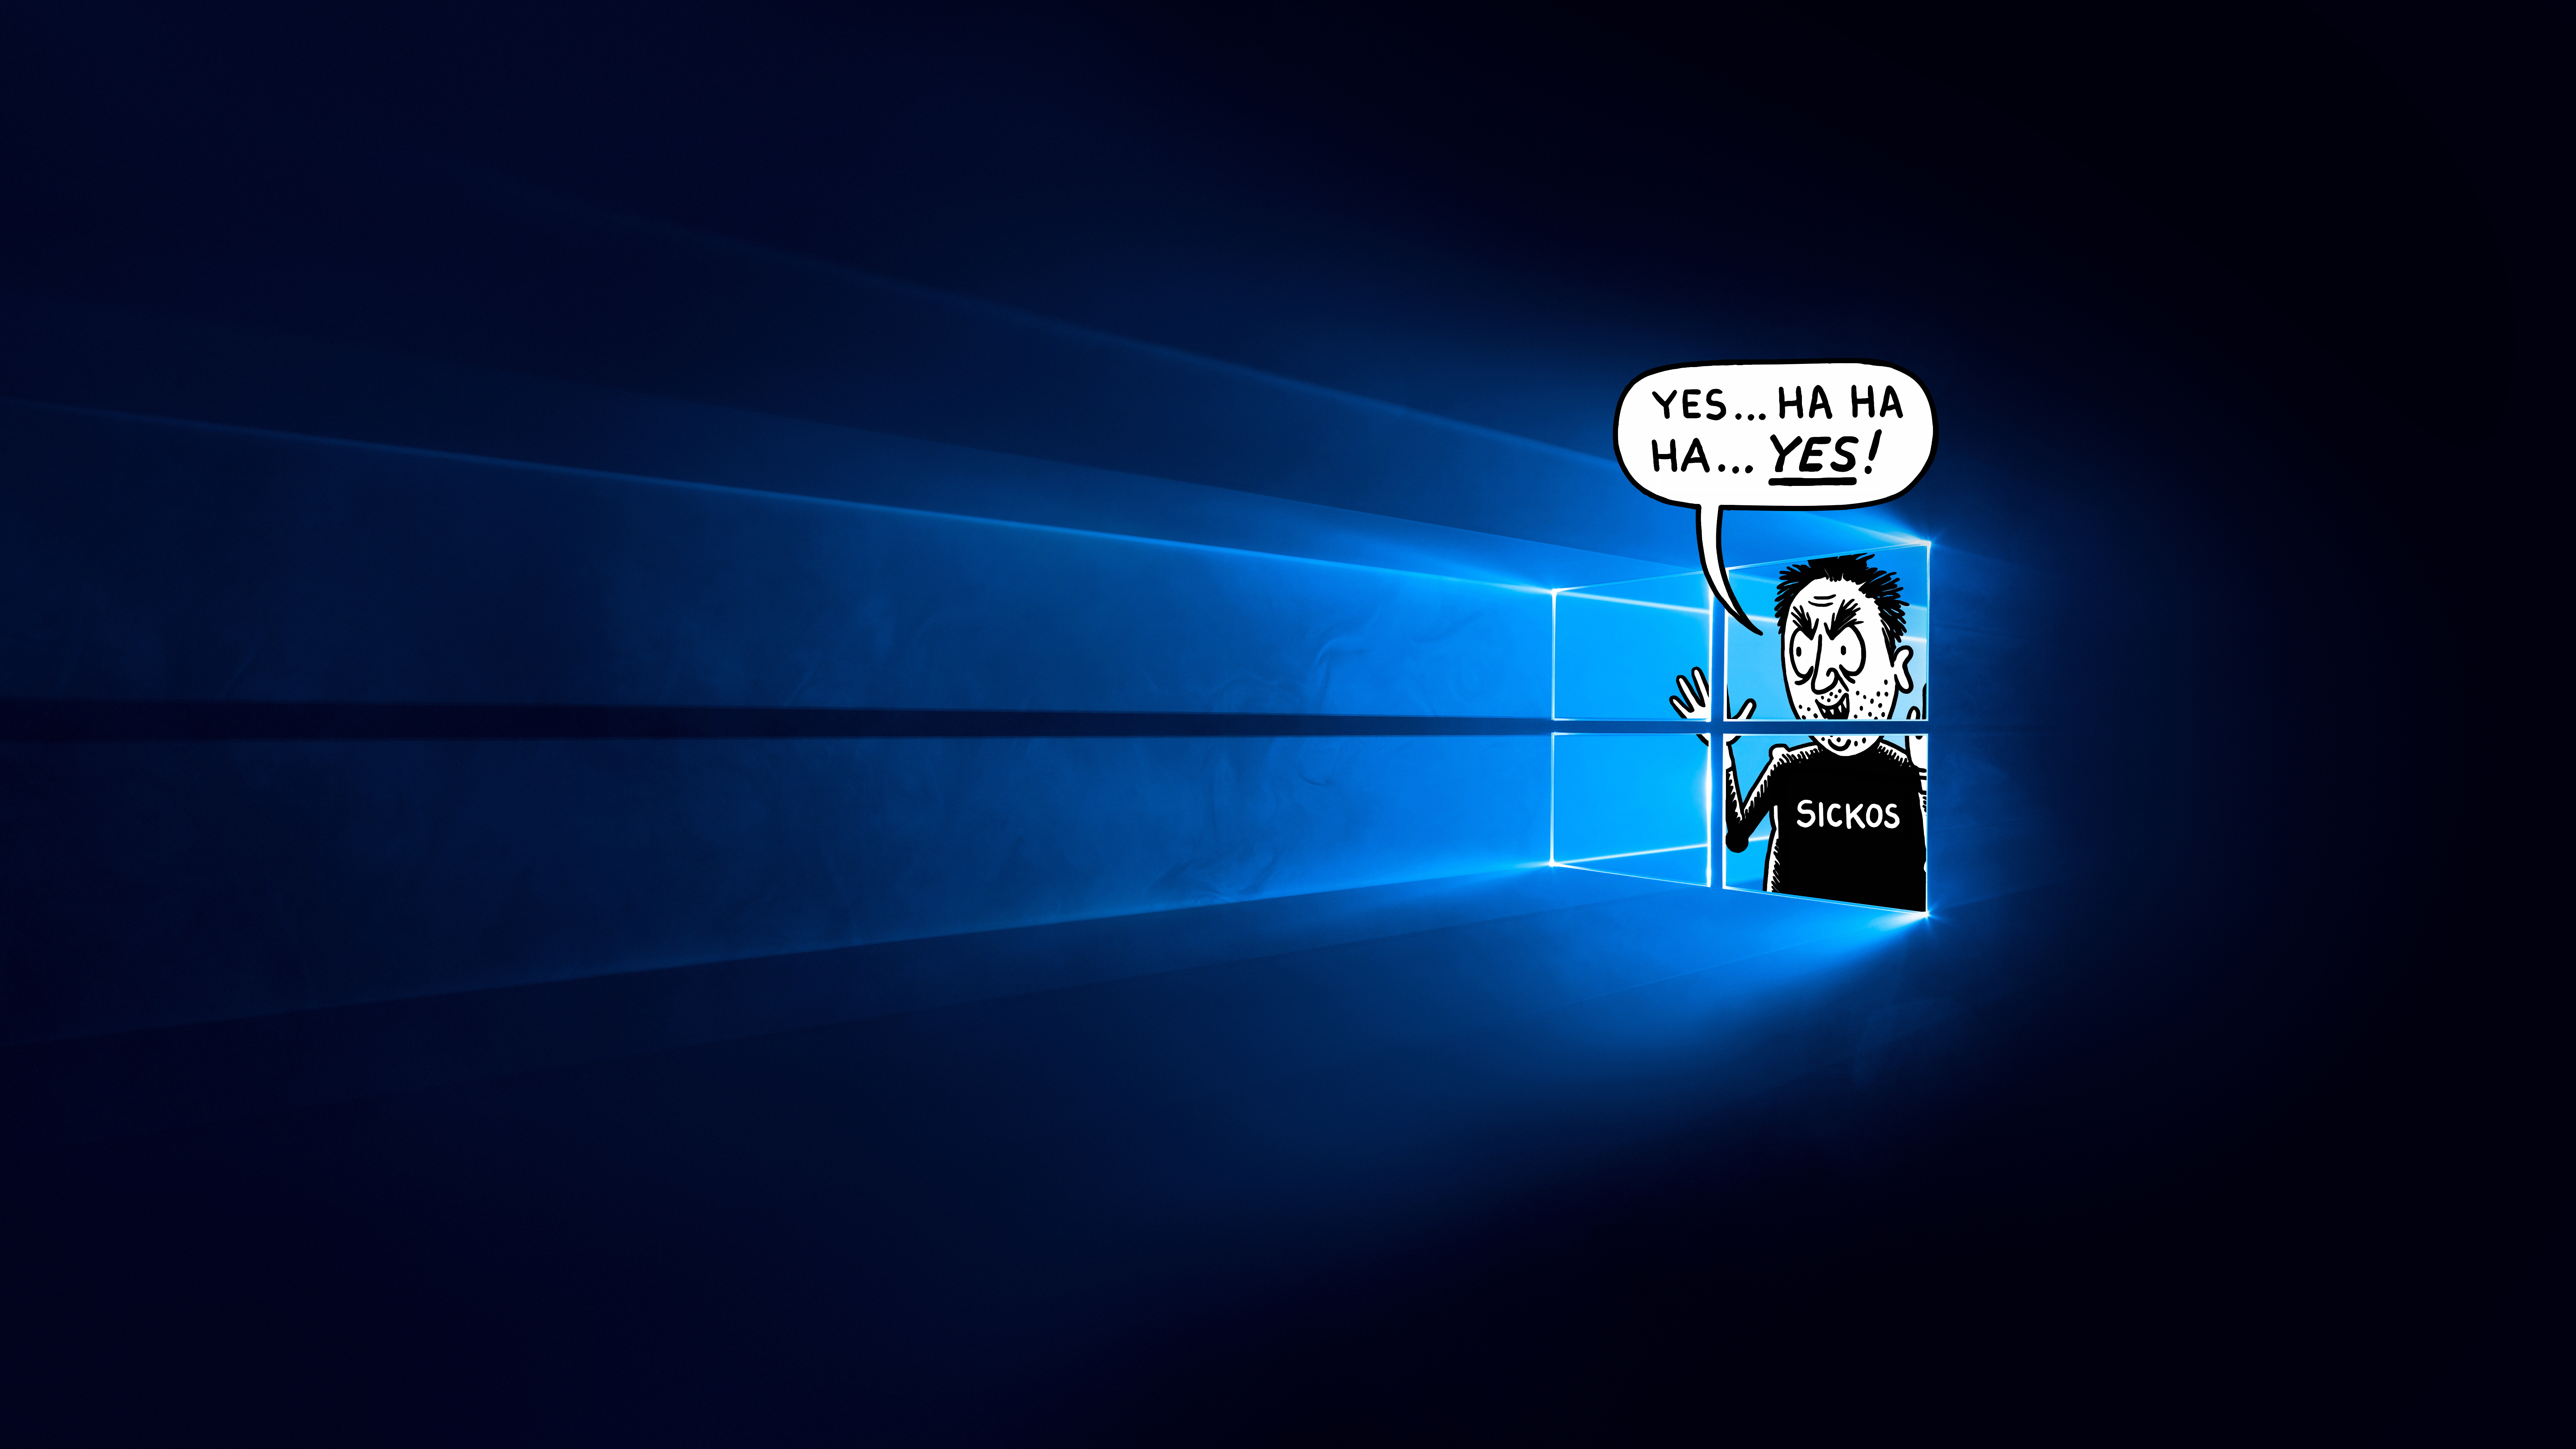 General 8000x4500 Windows 10 Microsoft digital art windows logo Microsoft Windows humor simple background memes text blue background minimalism Yes